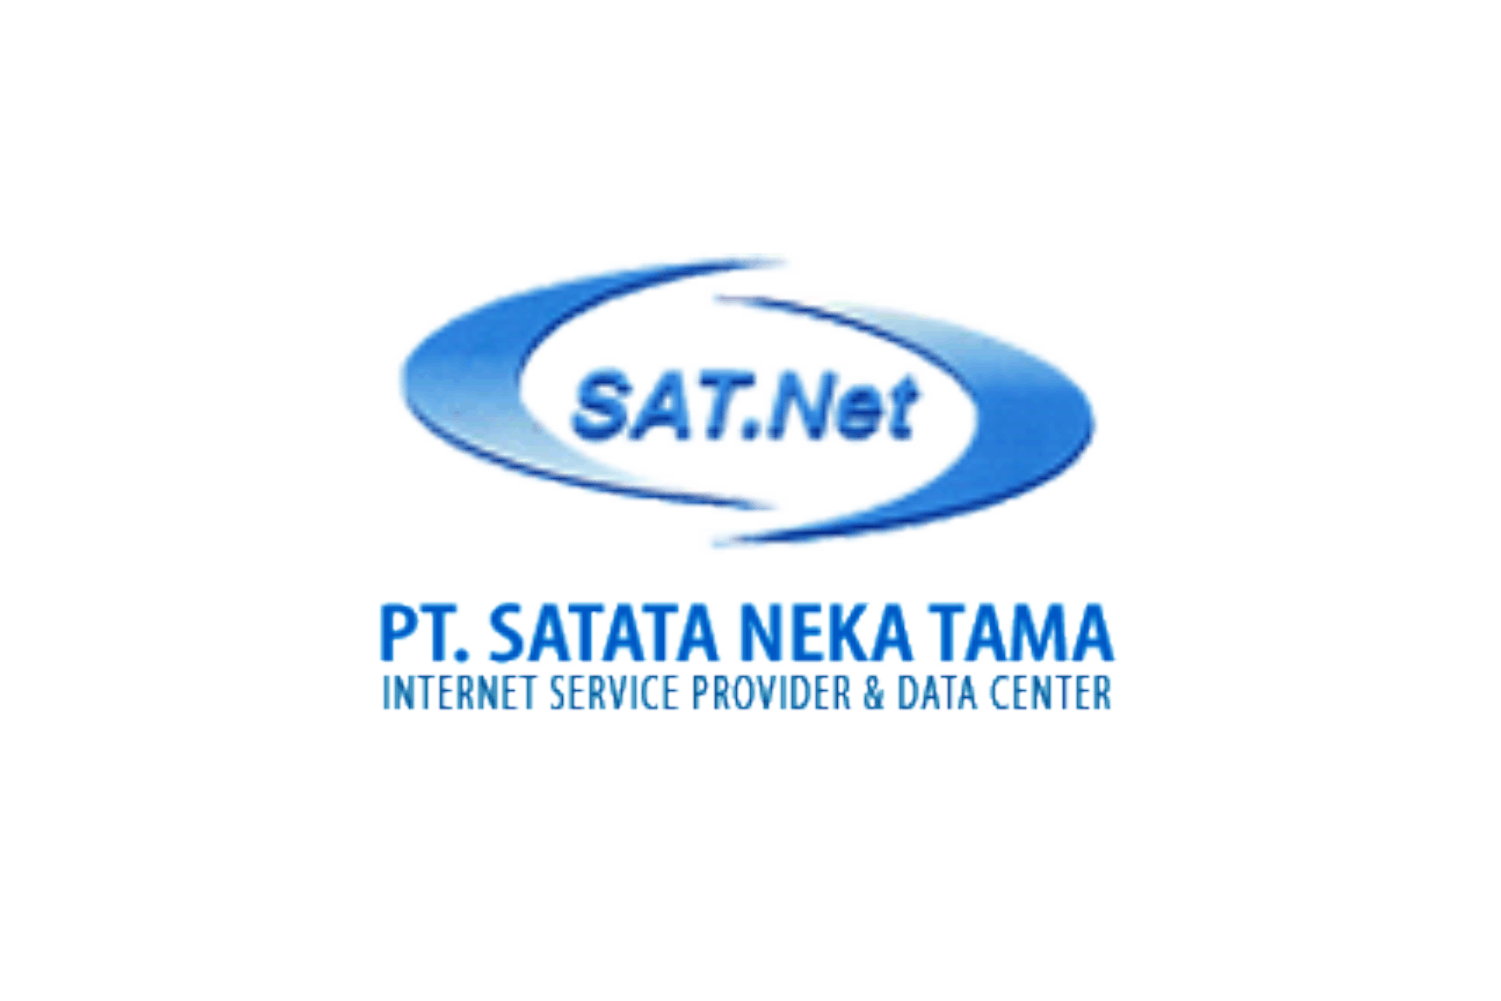 Satnet Logo